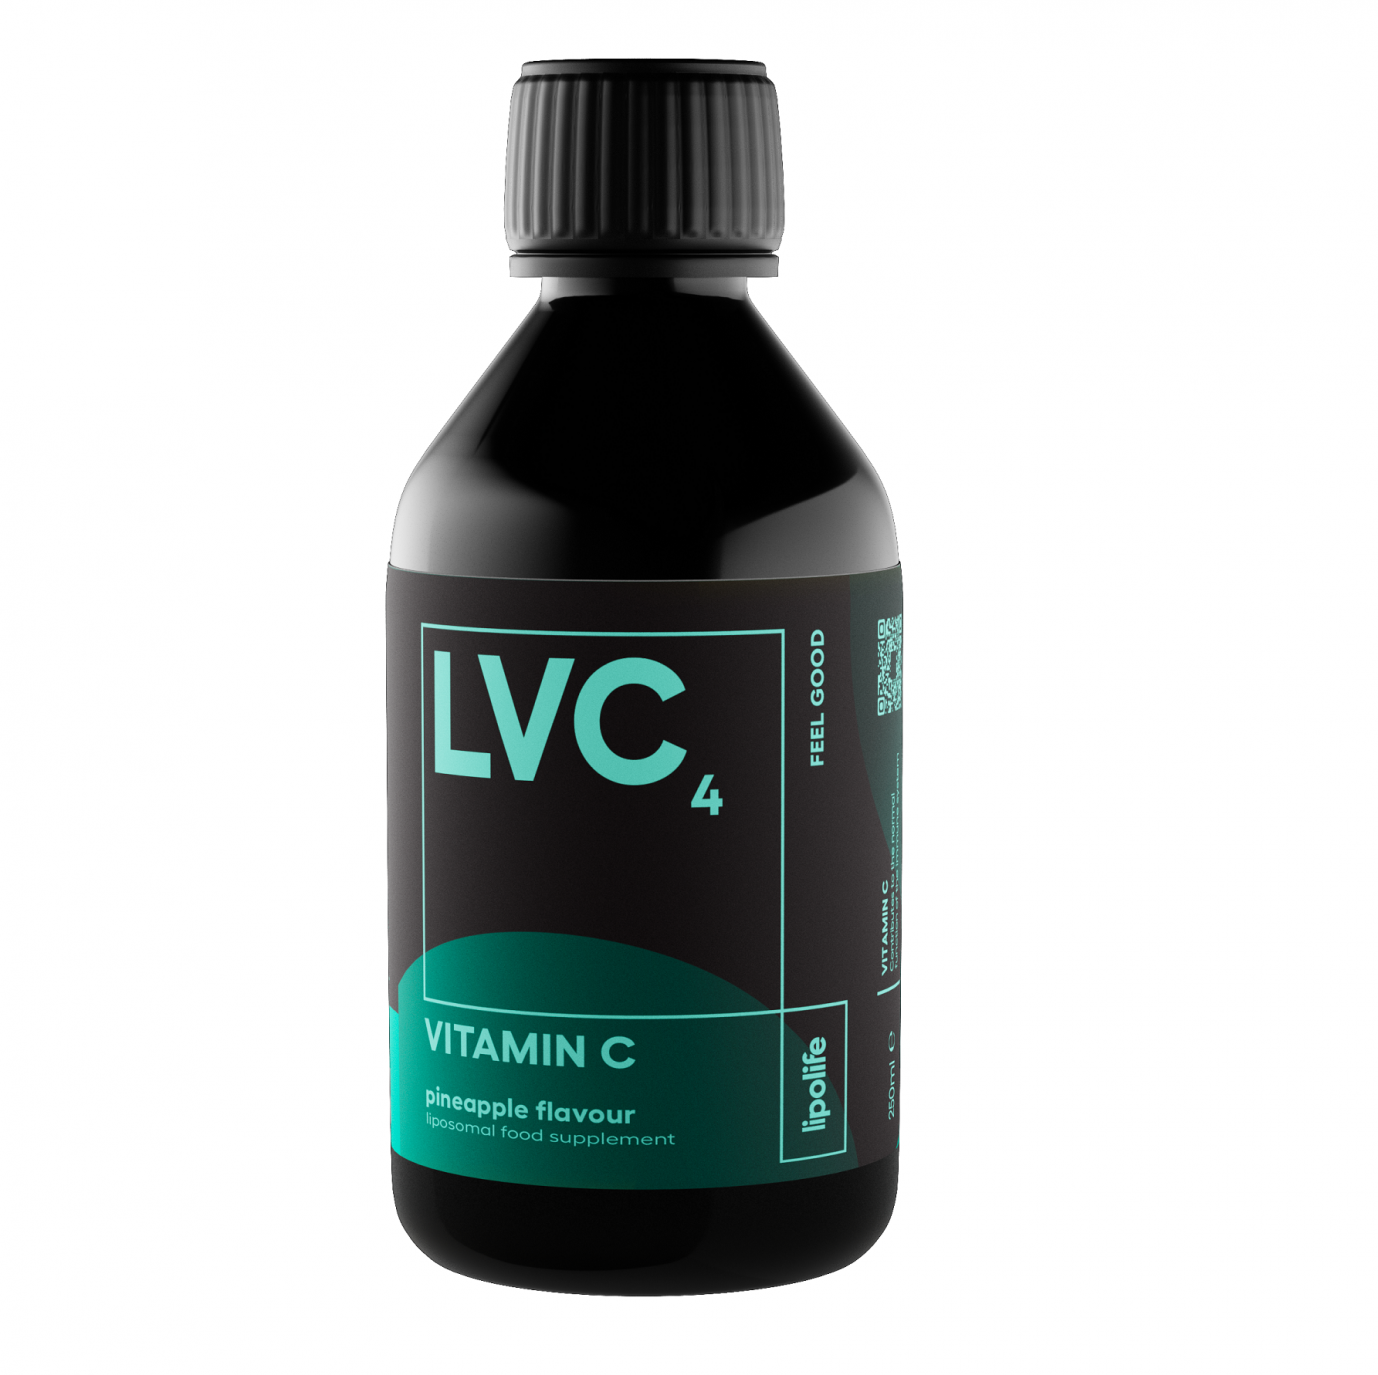 LVC4 Vitamin C Pineapple Flavour 240ml (Liposomal)